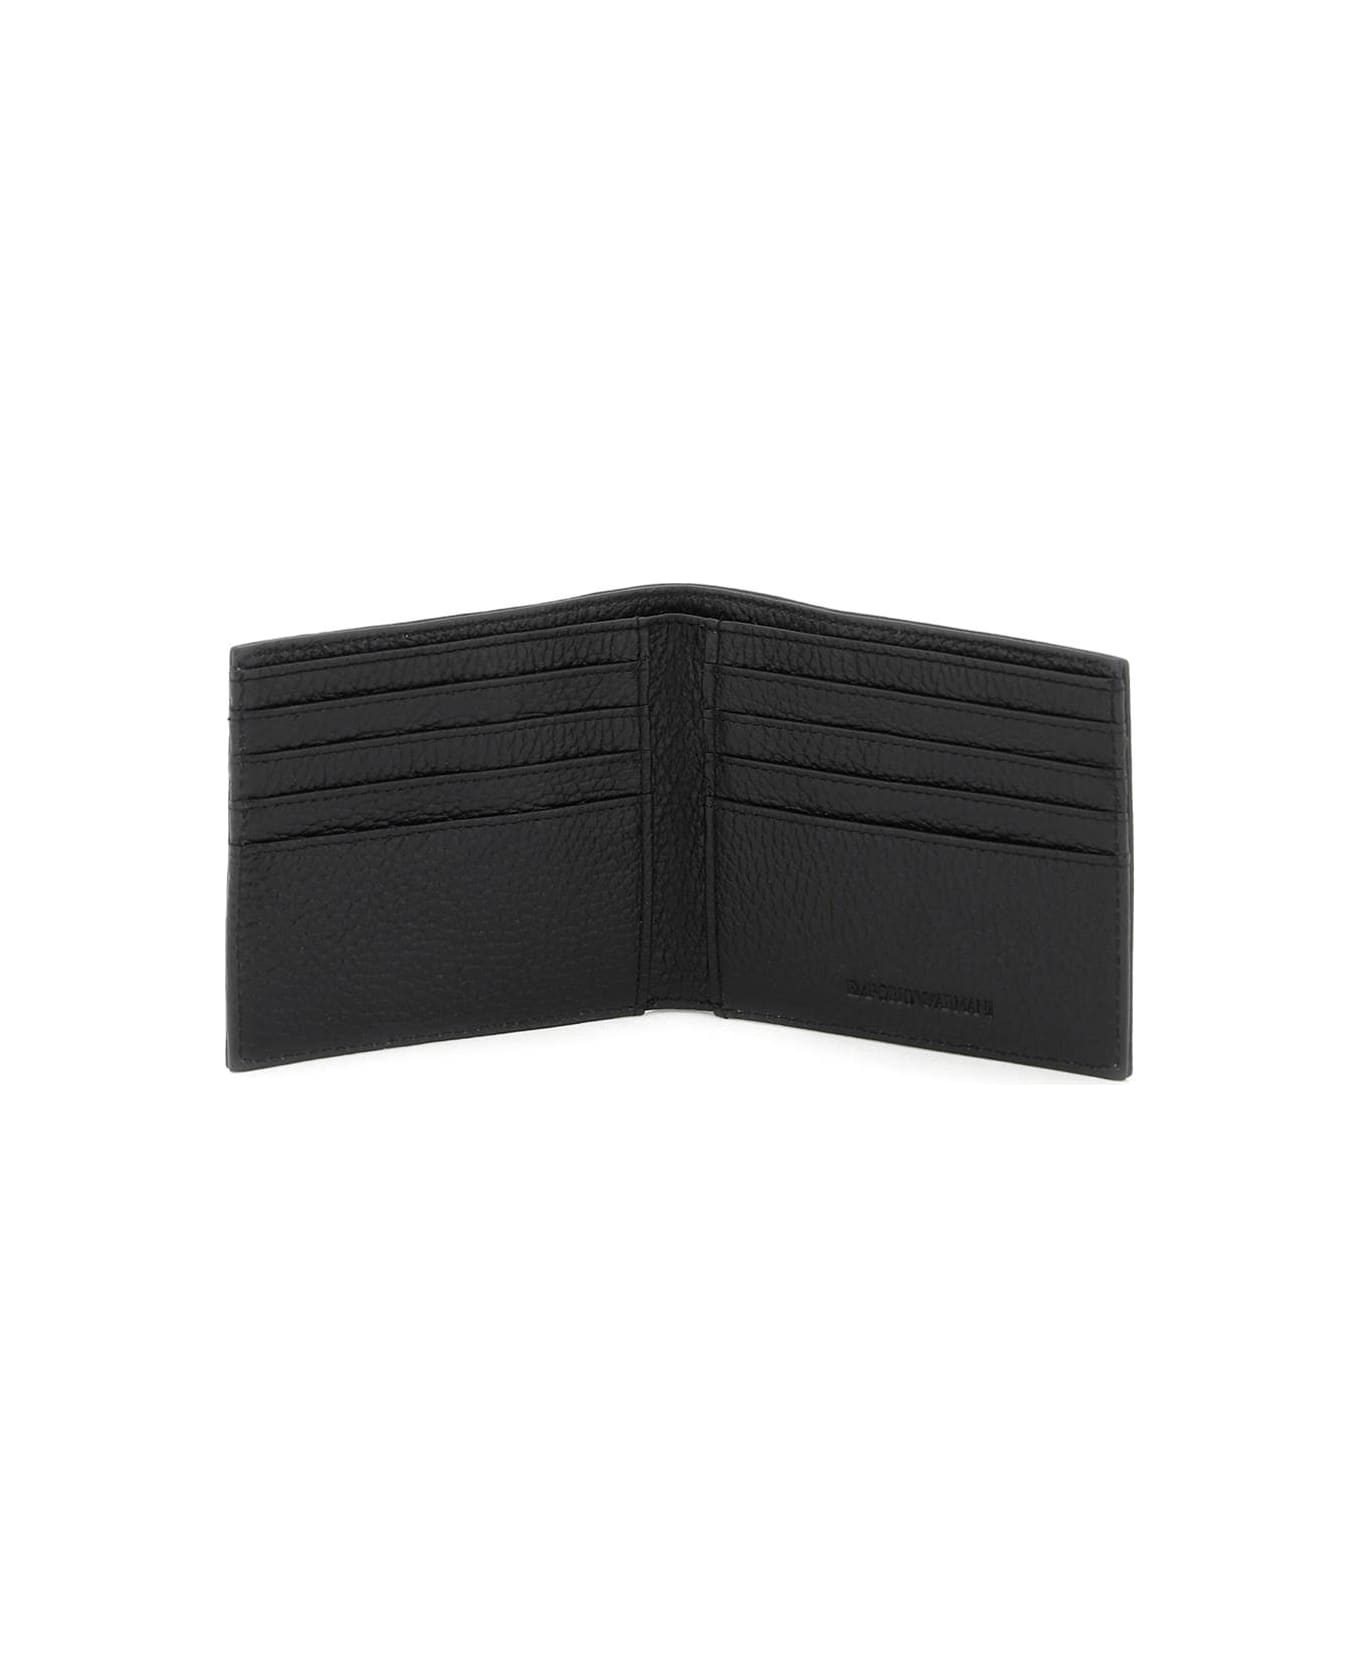 Emporio Armani Grained Leather Wallet - Black